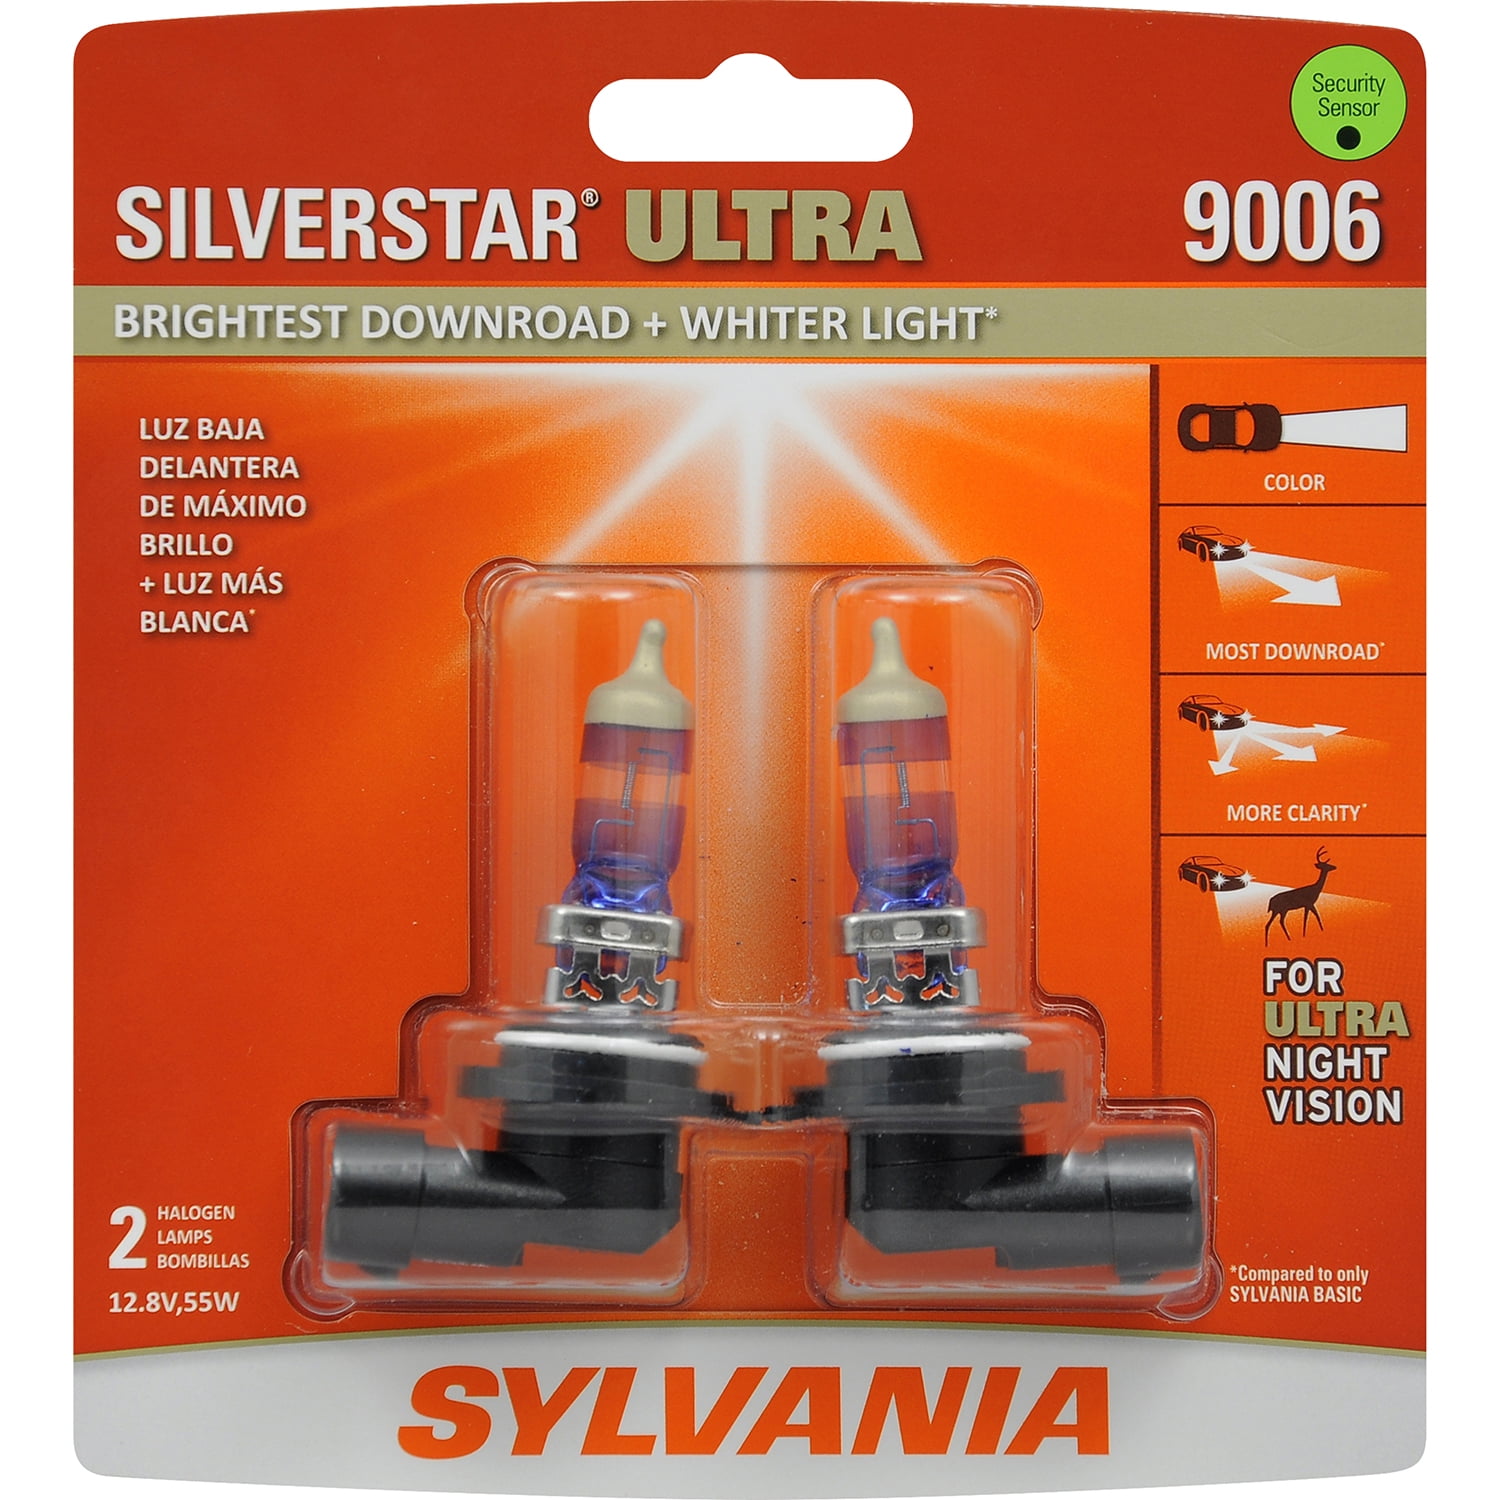 sympathie vieren oorlog Sylvania 9006 SilverStar Ultra Halogen Headlight Bulb, Pack of 2. -  Walmart.com